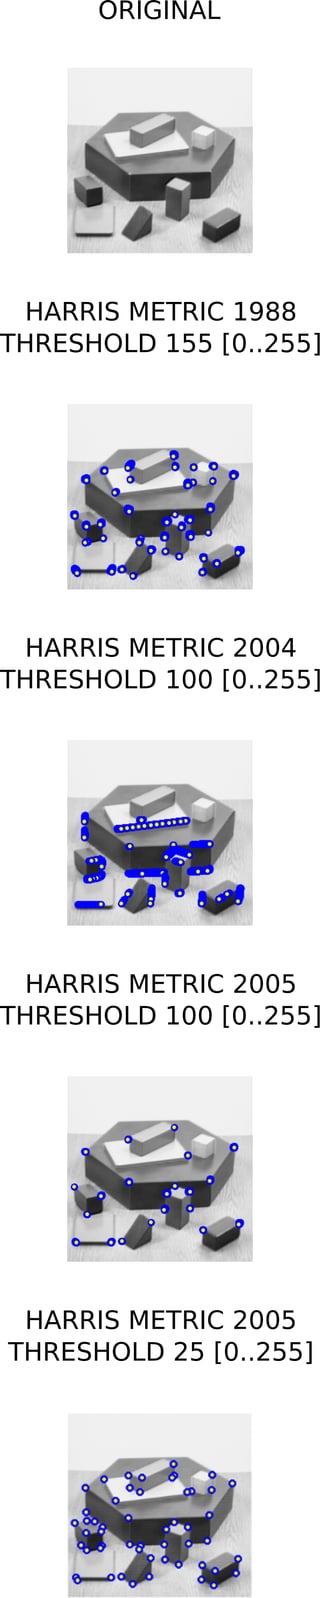 ORIGINAL

HARRIS METRIC 1988
THRESHOLD 155 [0..255]

HARRIS METRIC 2004
THRESHOLD 100 [0..255]

HARRIS METRIC 2005
THRESHOLD 100 [0..255]

HARRIS METRIC 2005
THRESHOLD 25 [0..255]

 